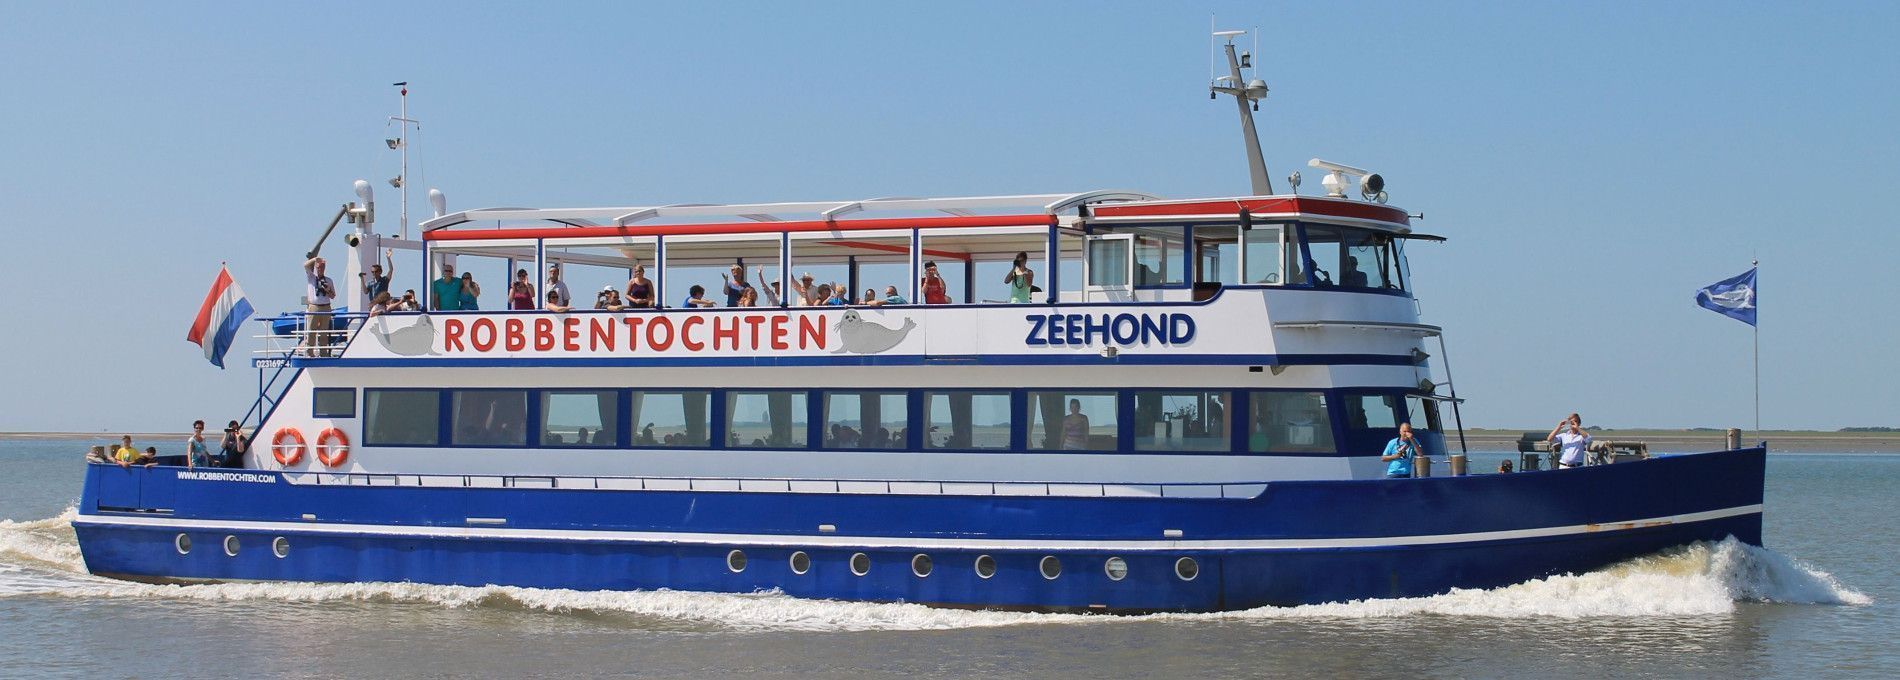 Boat excursion company Zeehond - Tourist Information 